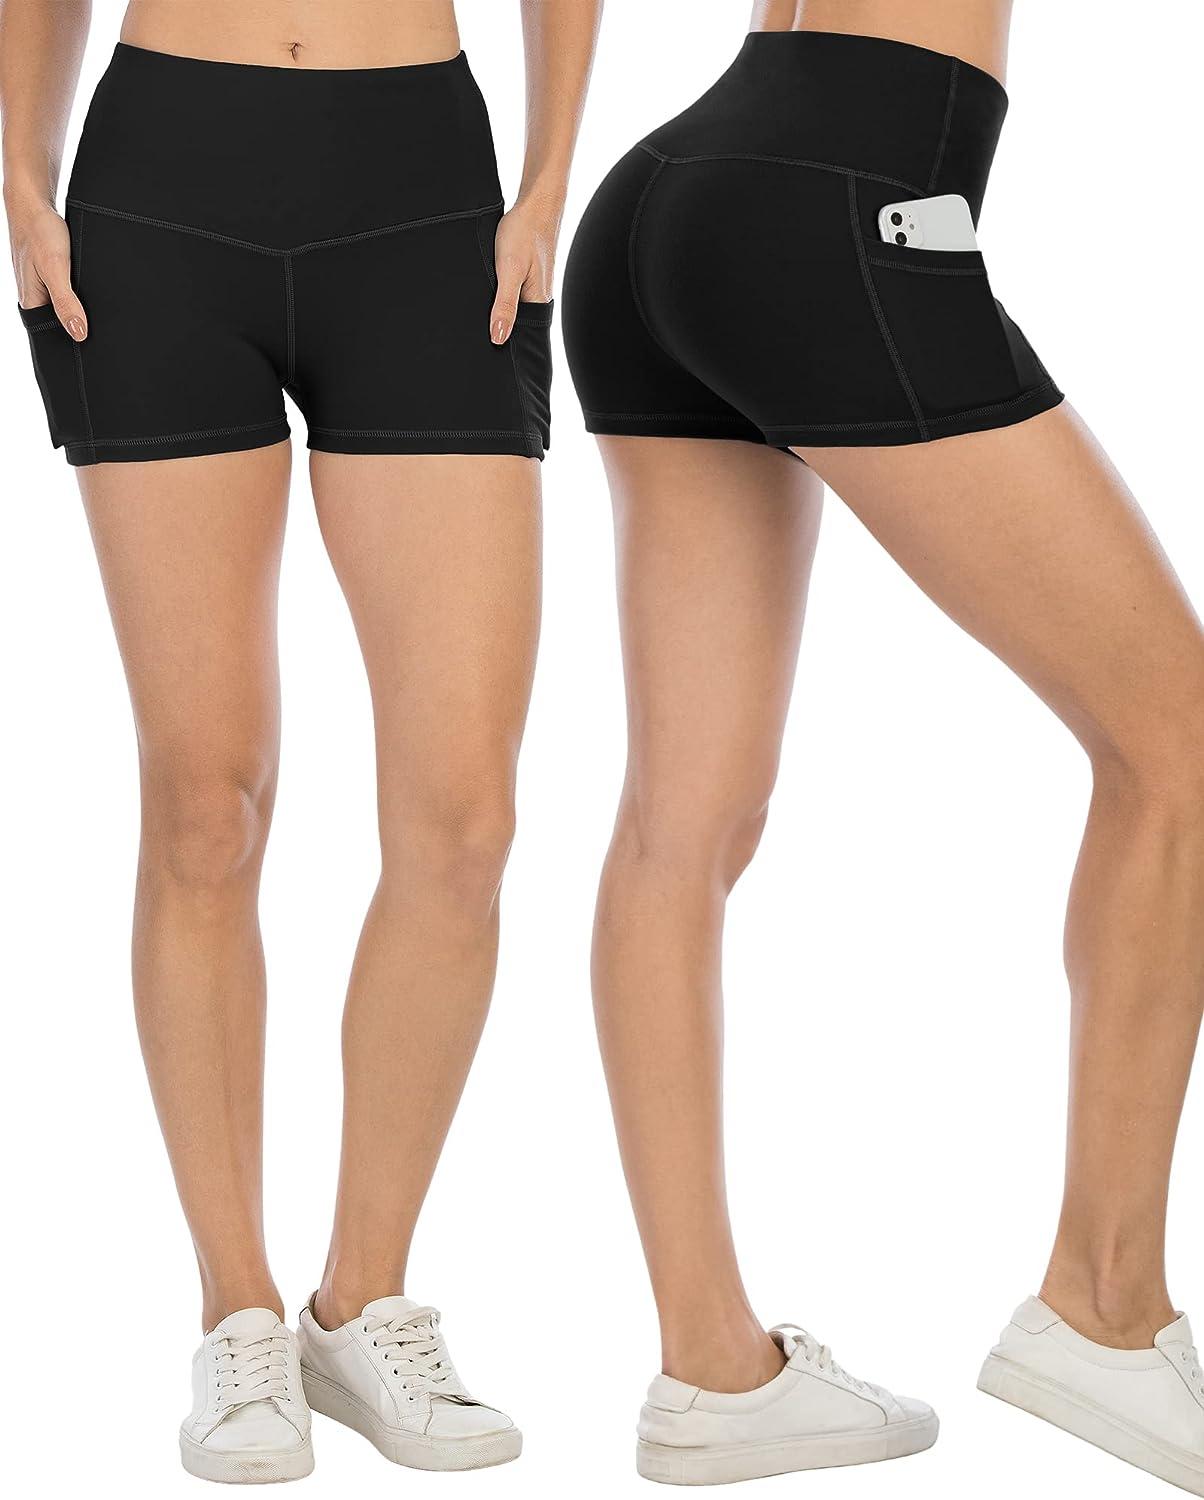 CHRLEISURE High Waisted Yoga Biker Shorts for Women with Pockets